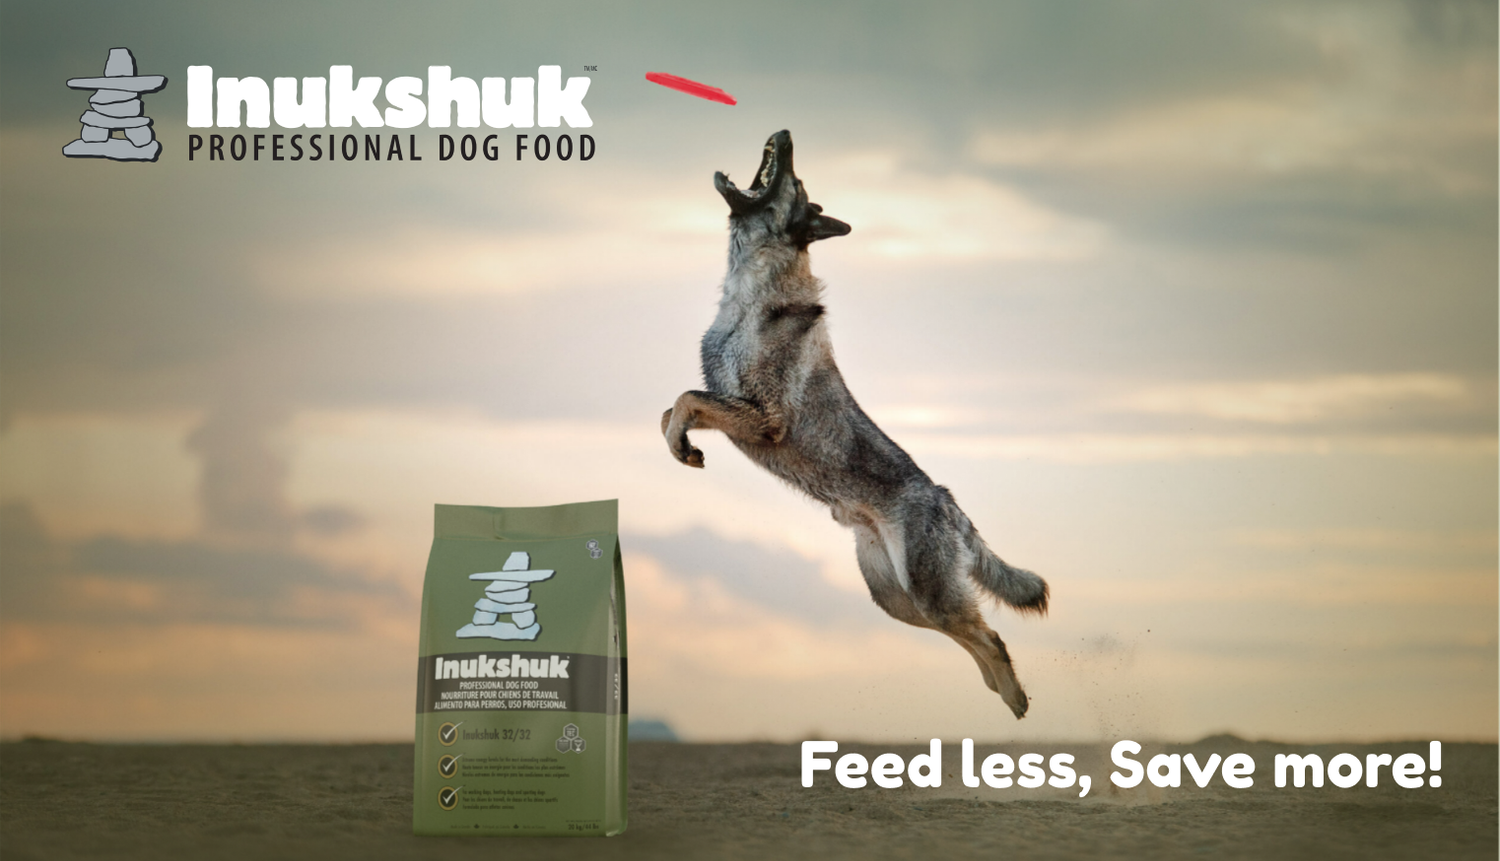 Inukshuk Professional Dog Food